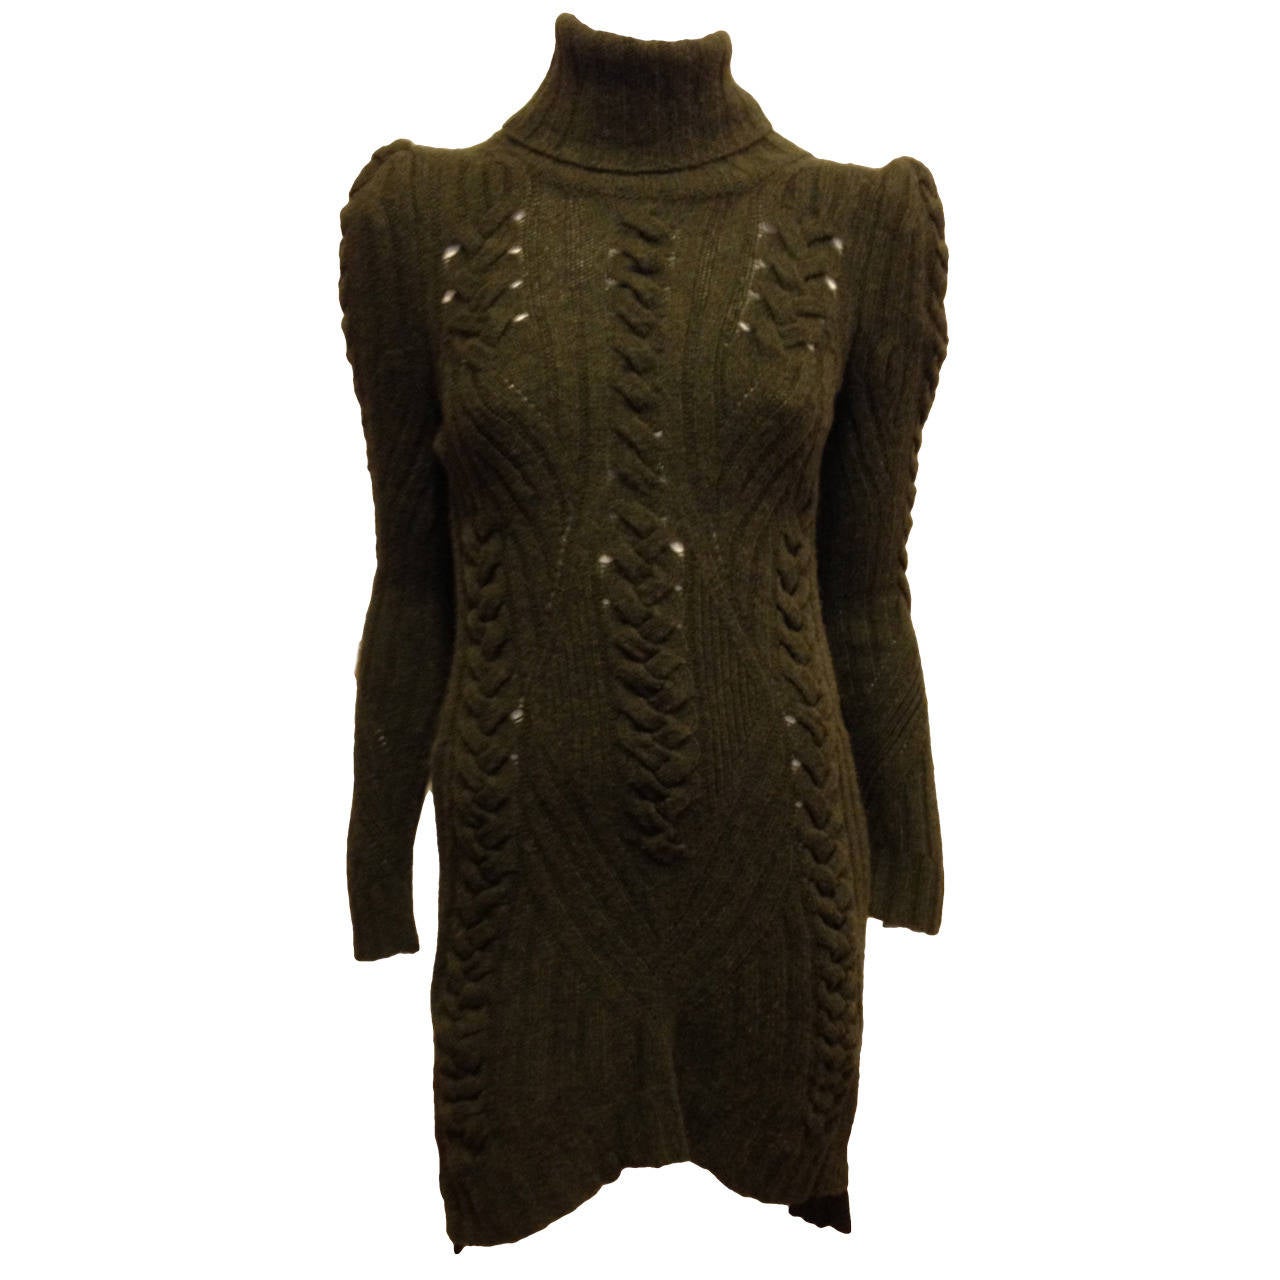 Celine Olive Green Knit Sweater Dress at 1stdibs